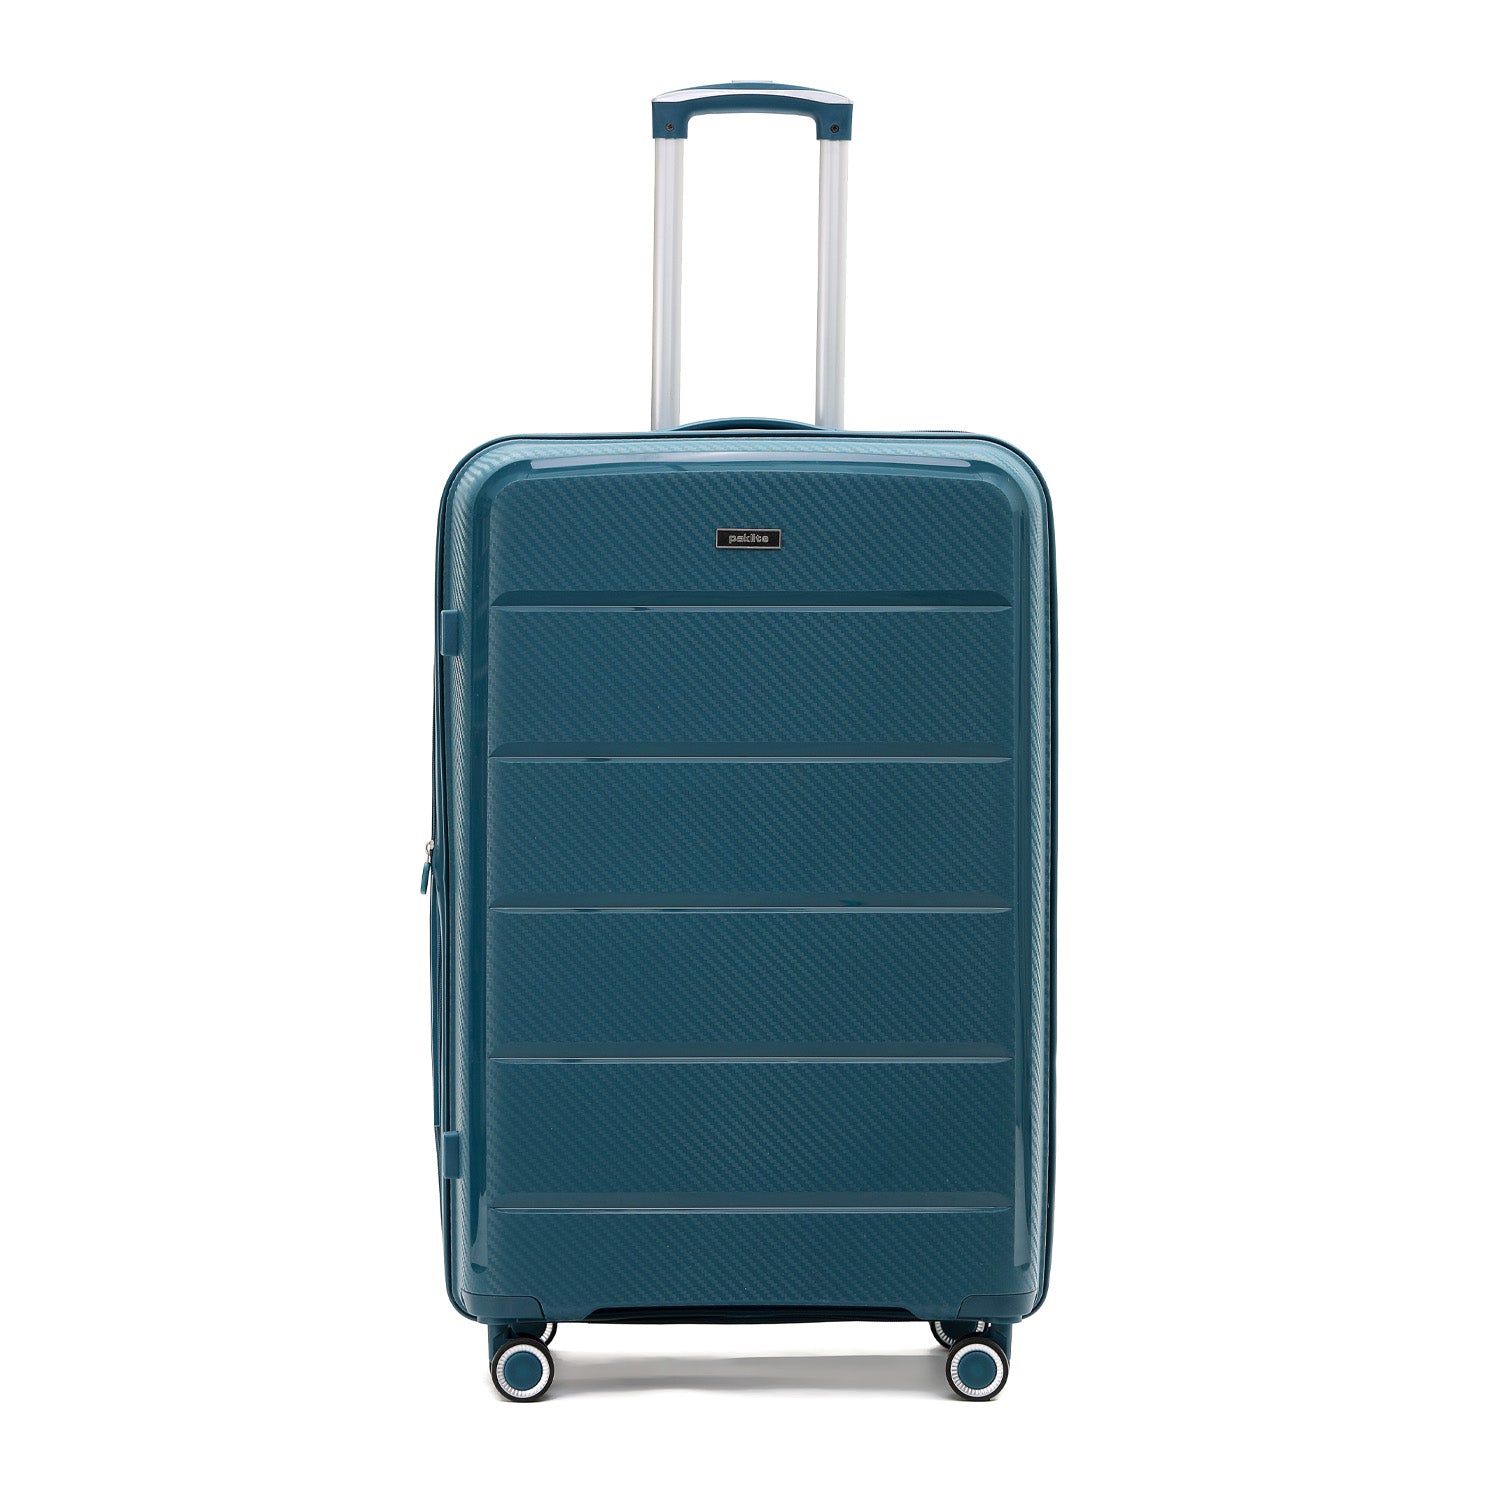 Paklite - PA7350 Large 75cm spinner suitcase - Blue-1